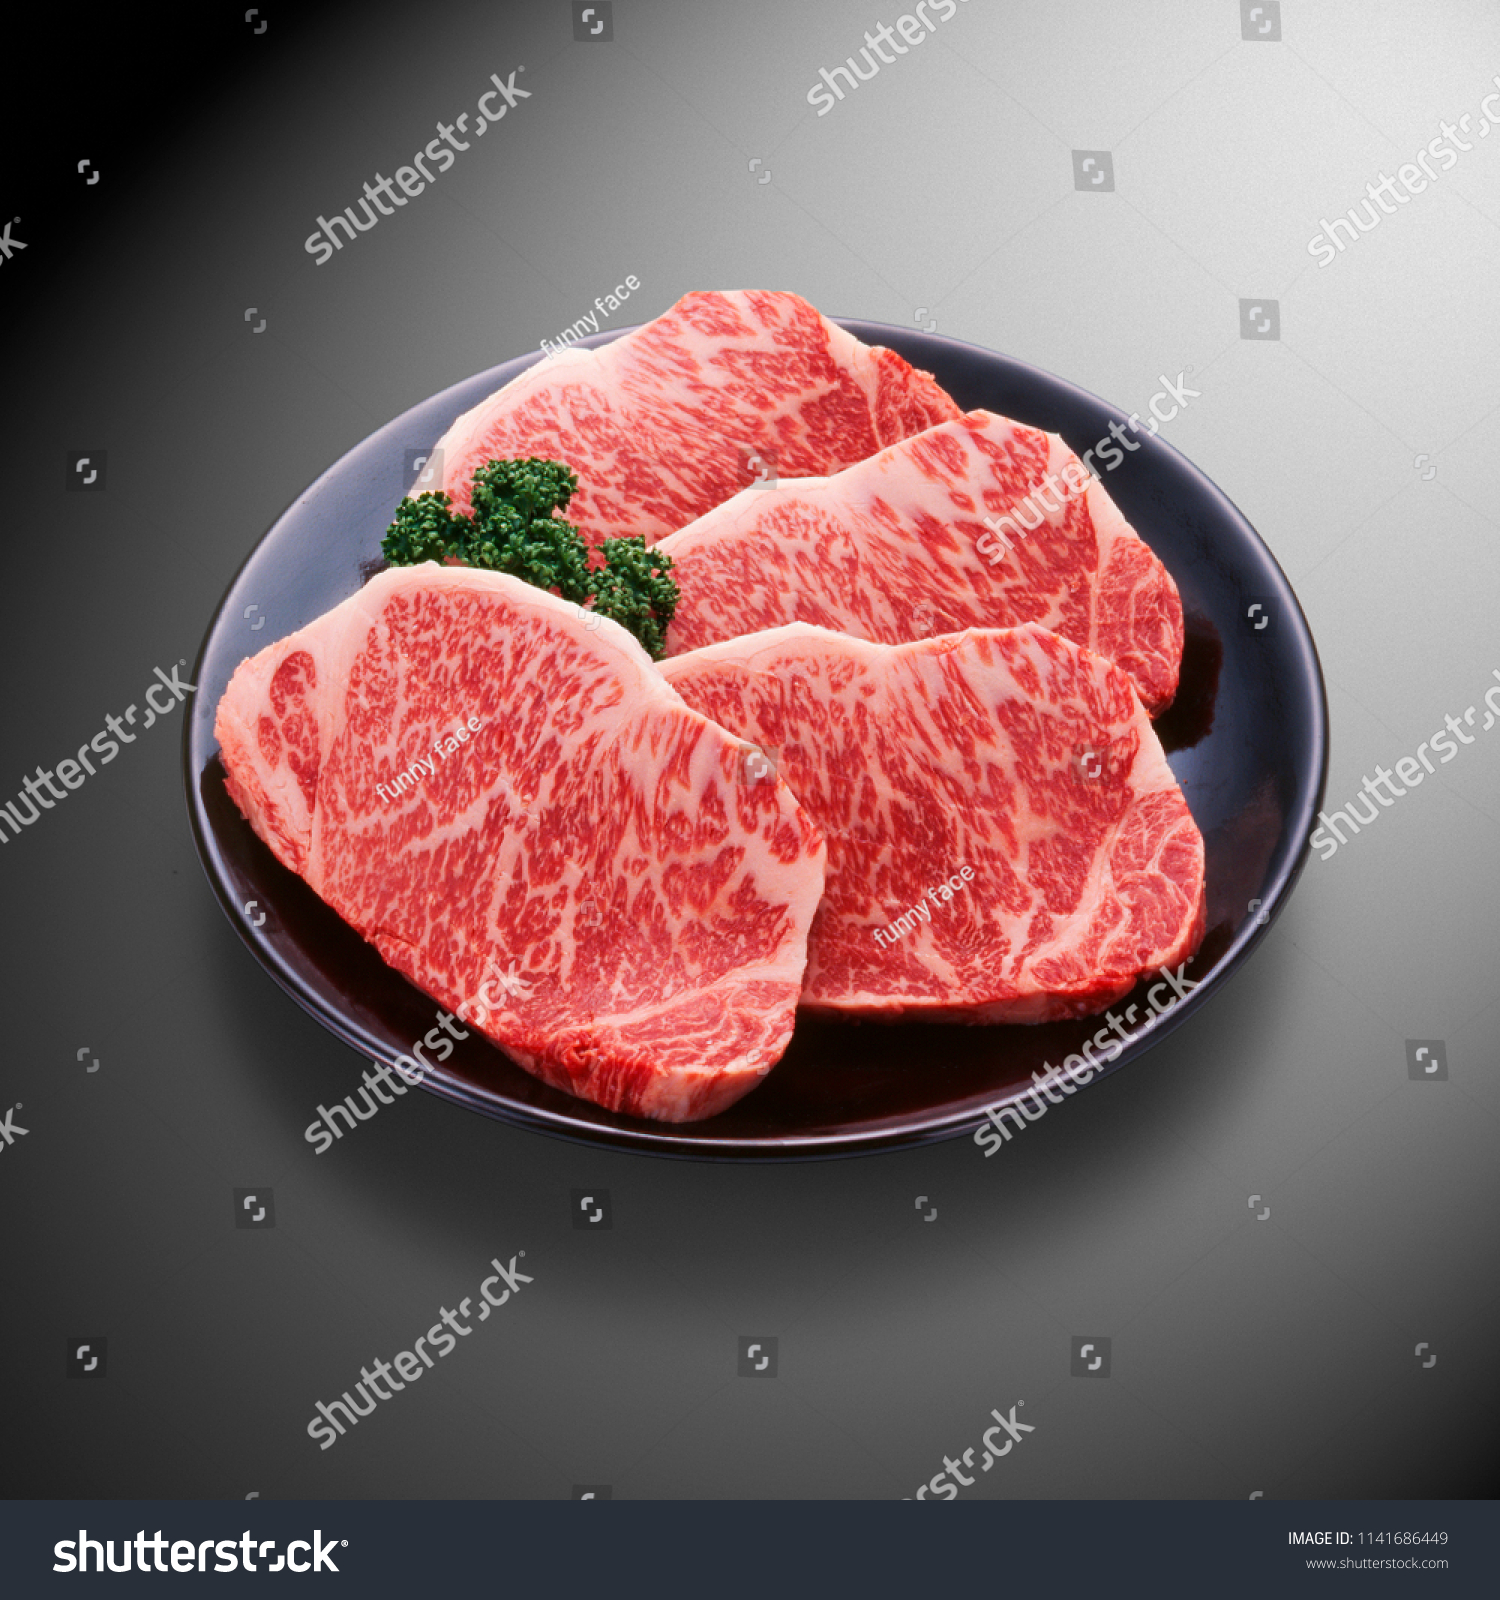 Premium Japanese wagyu beef sliced in box for sirloin steak #1141686449